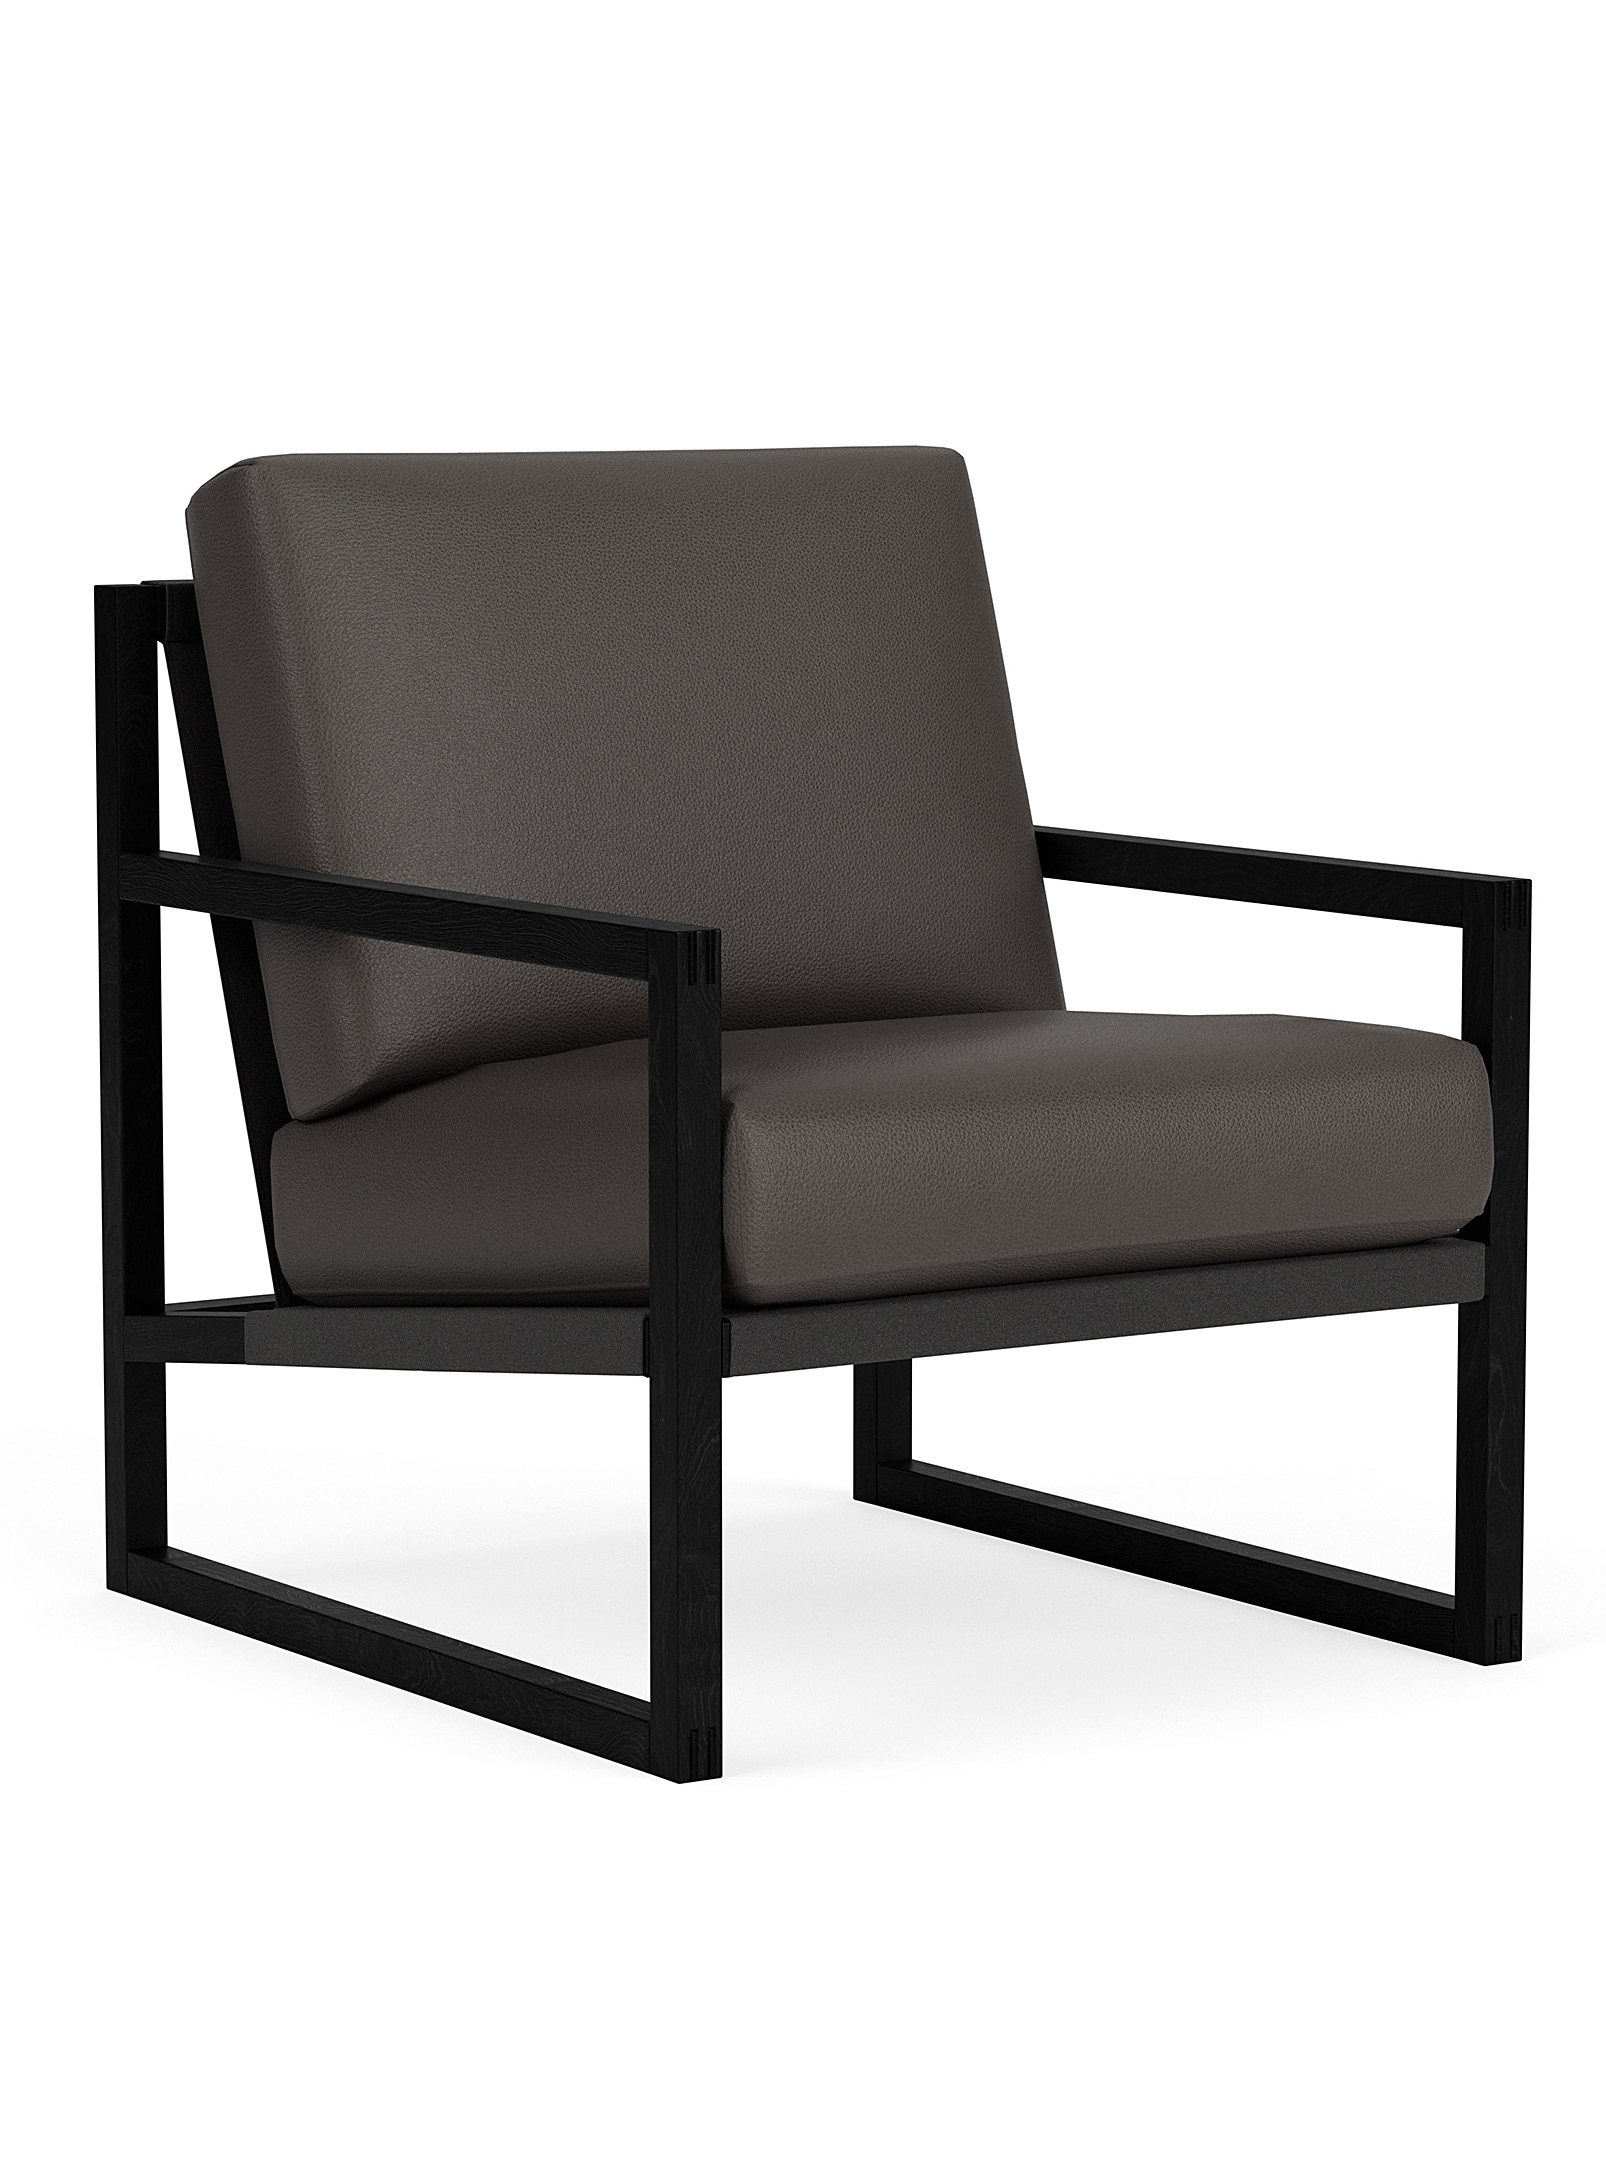 EQ3 - Le fauteuil en cuir chocolat